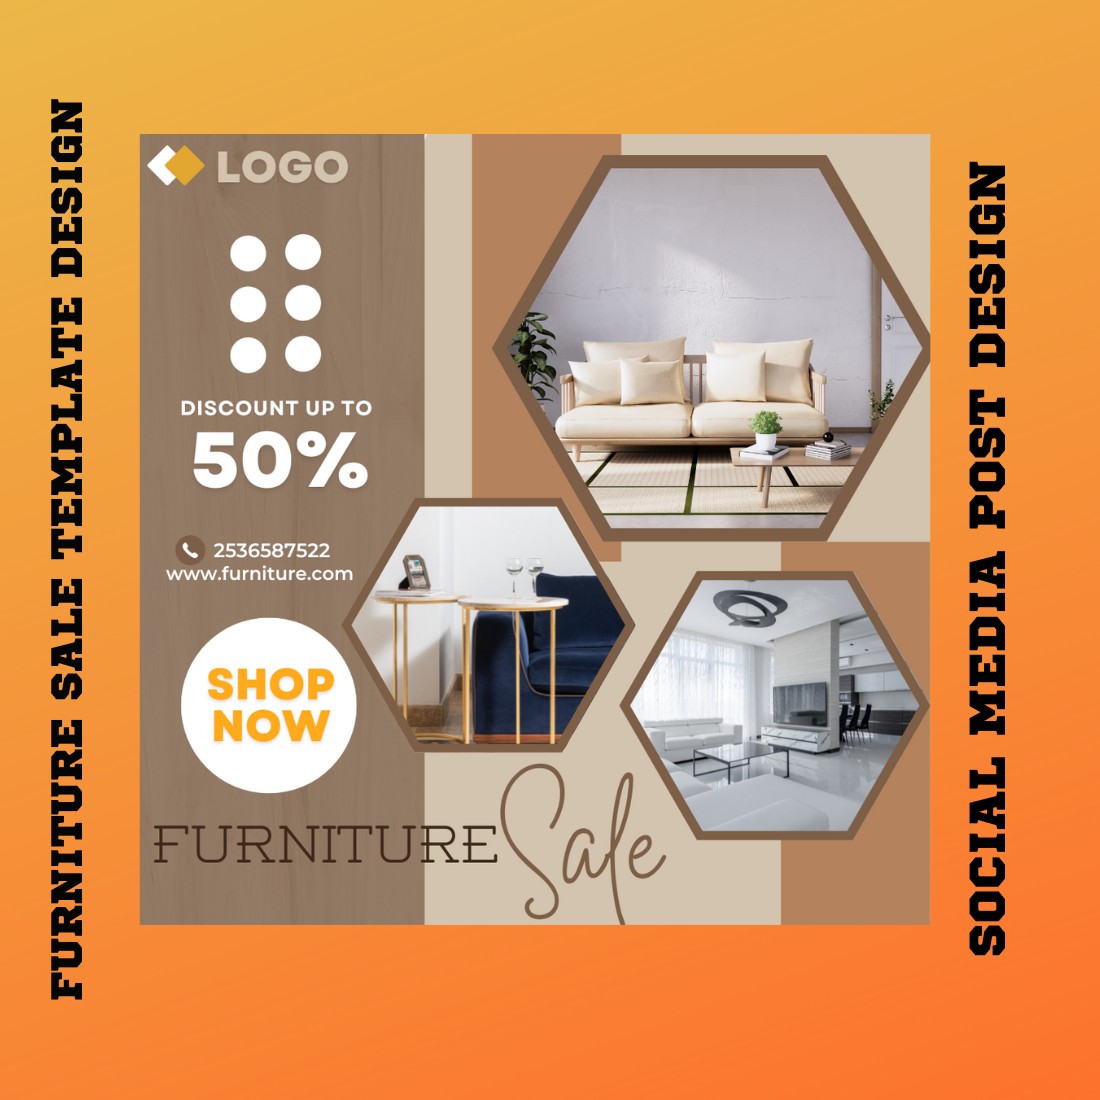 Flyer Furniture Sale Template Design cover image.